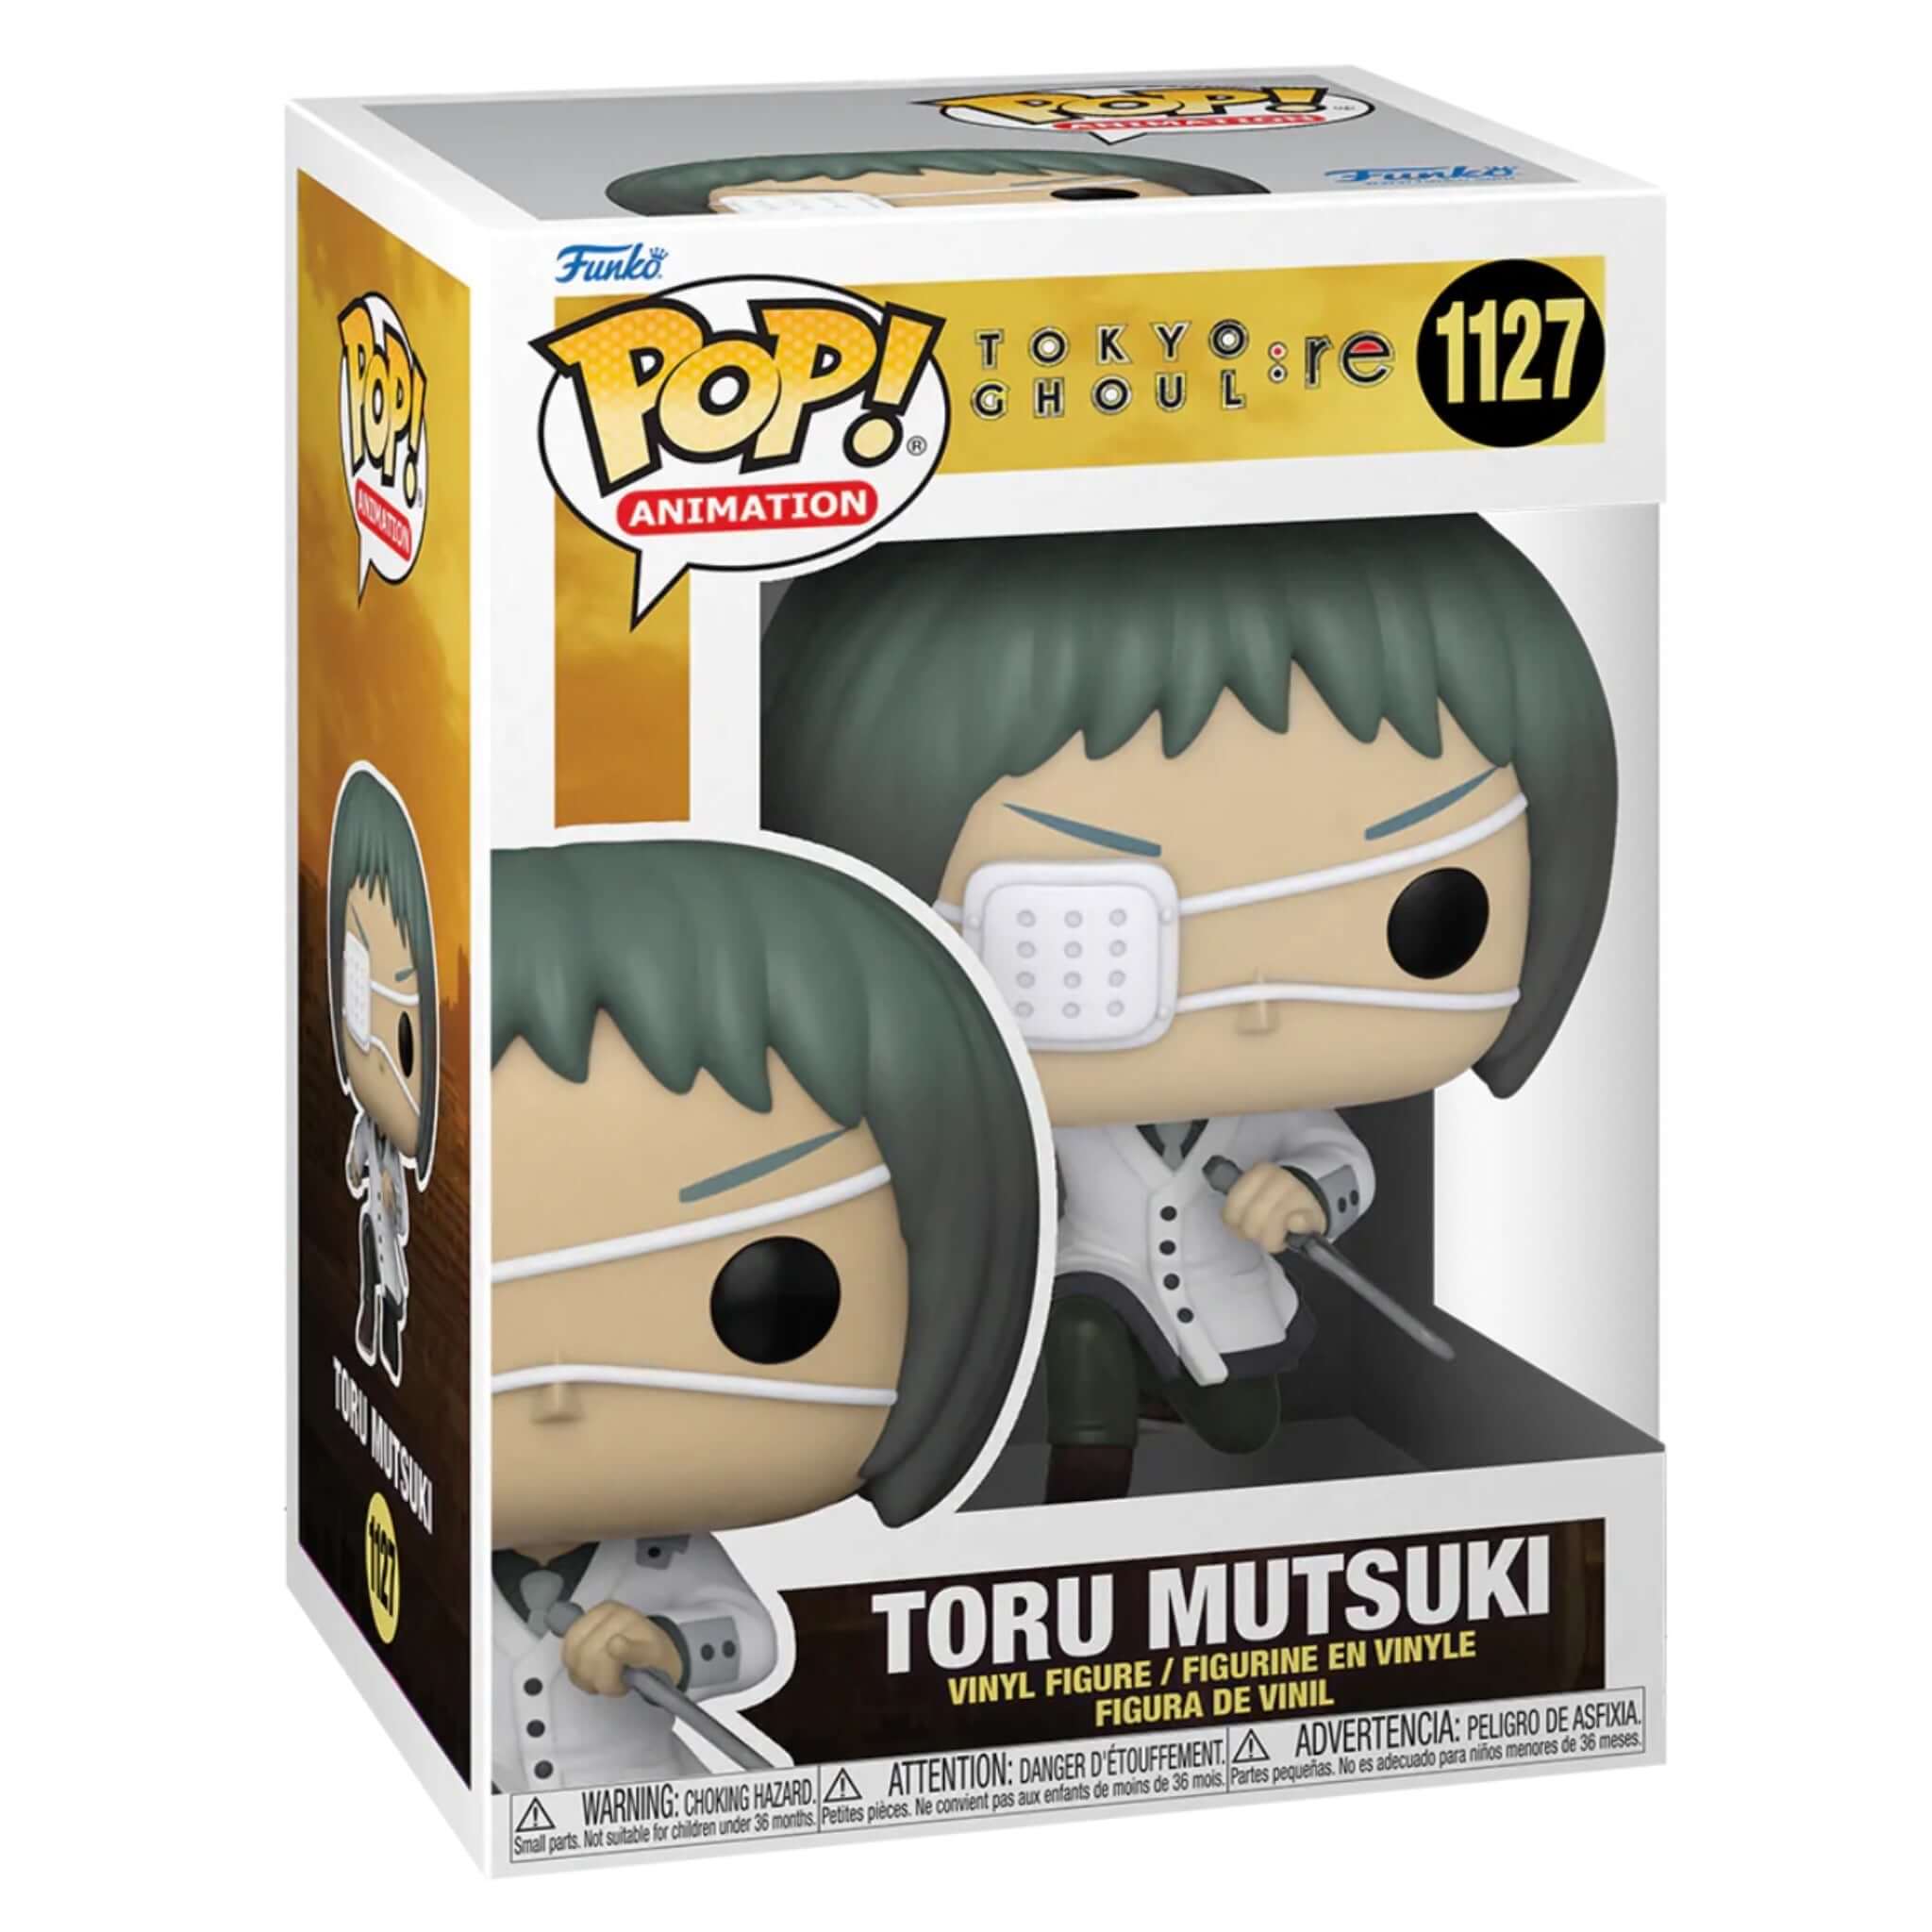 Toru Mutsuki Funko Pop!-Jingle Truck Toys